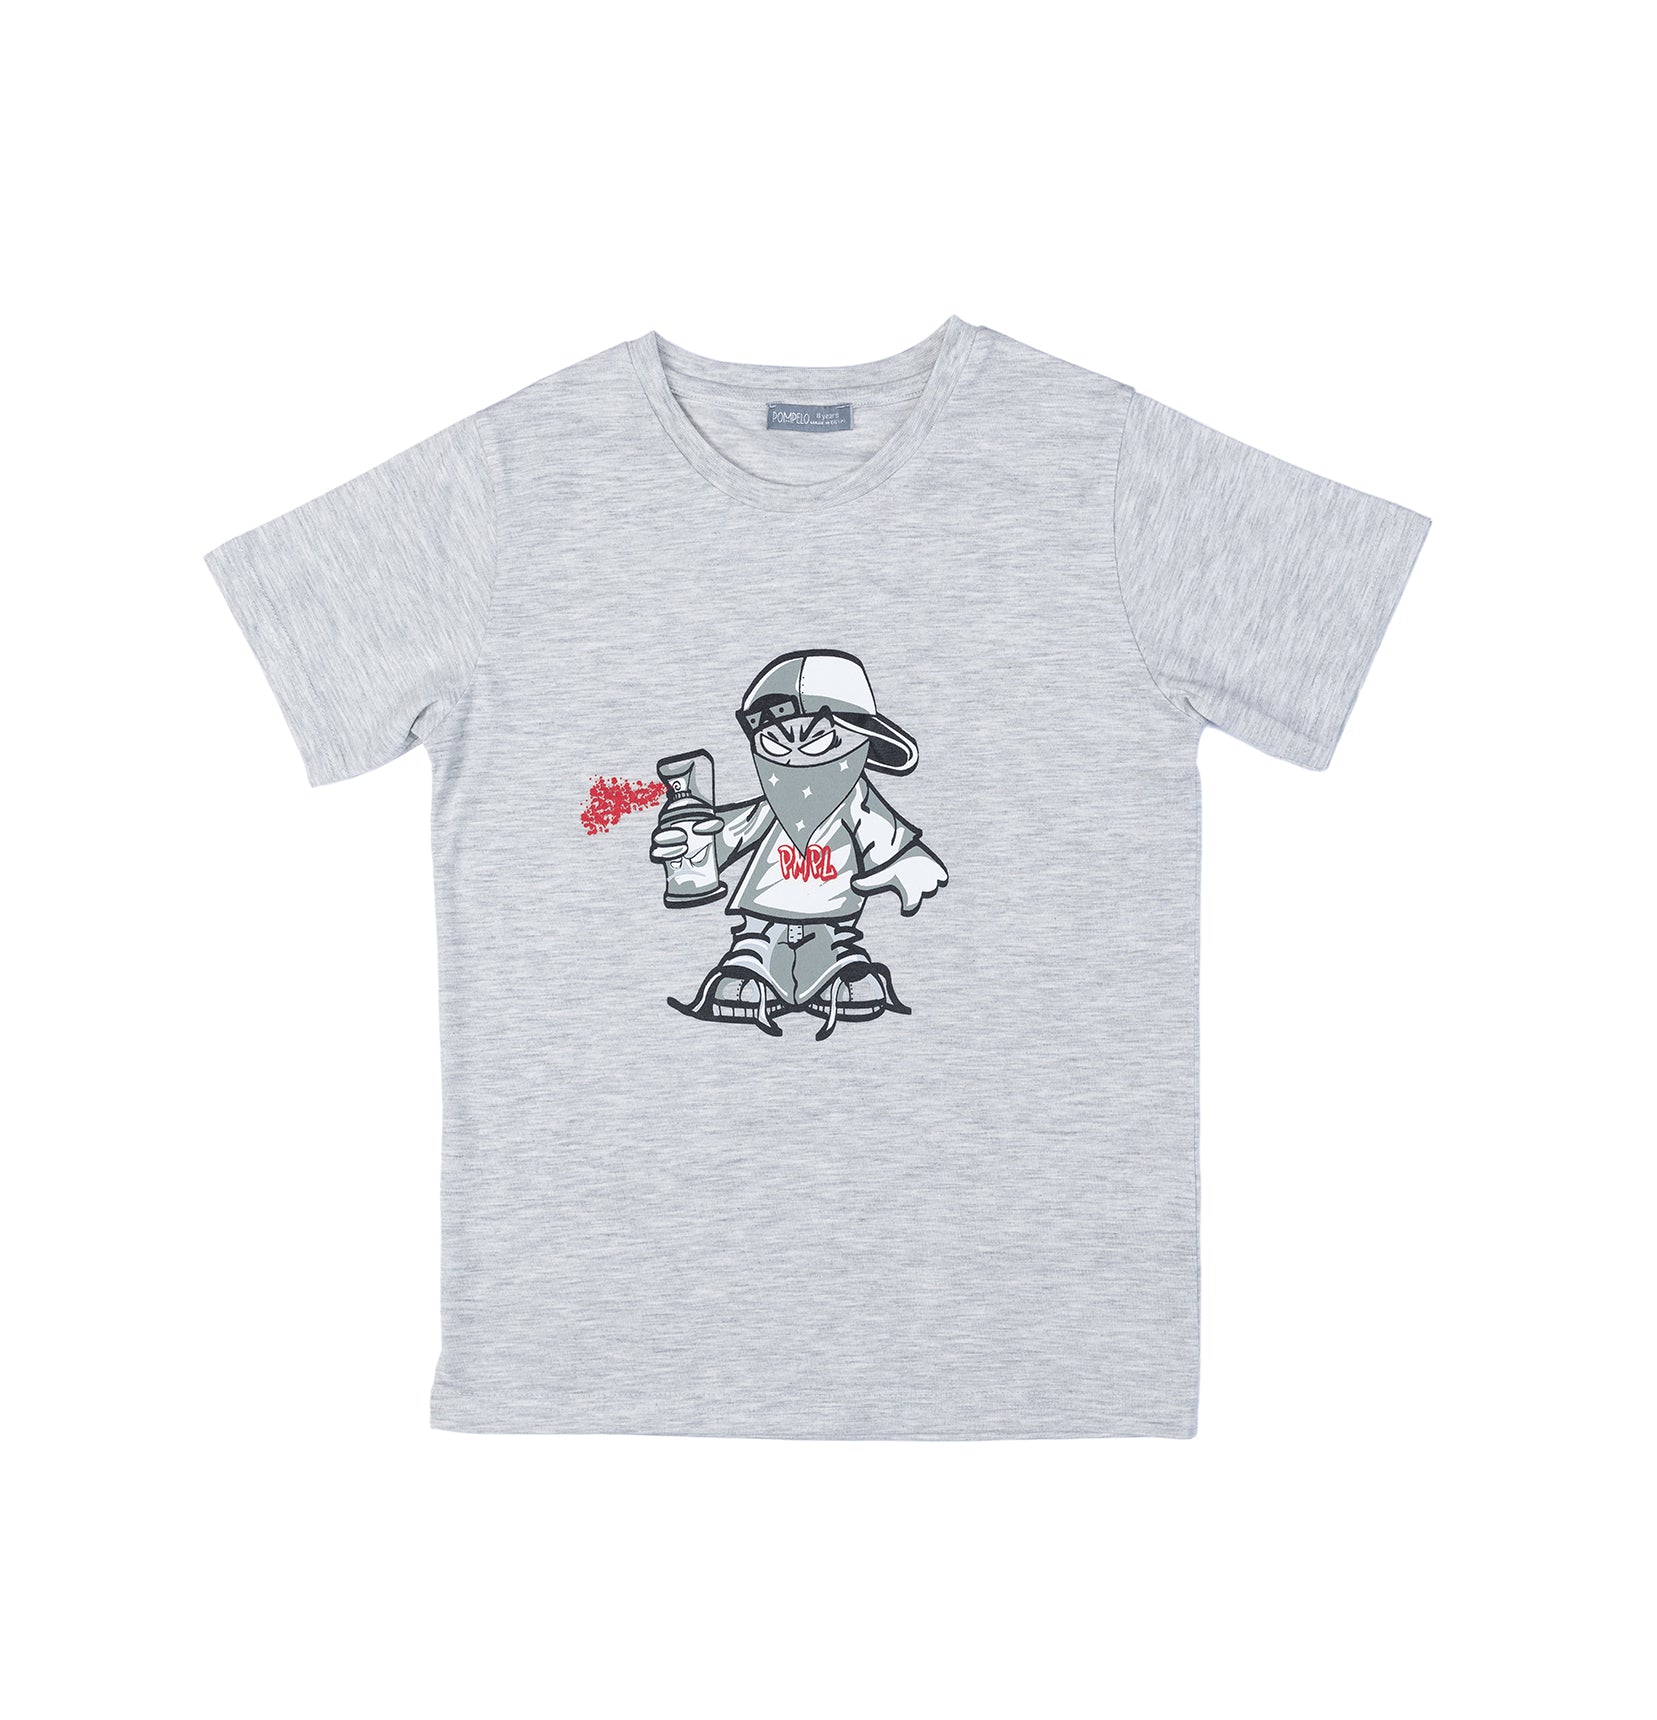 Fun & cartoonish printed half sleeve tshirt for boys by Pompelo